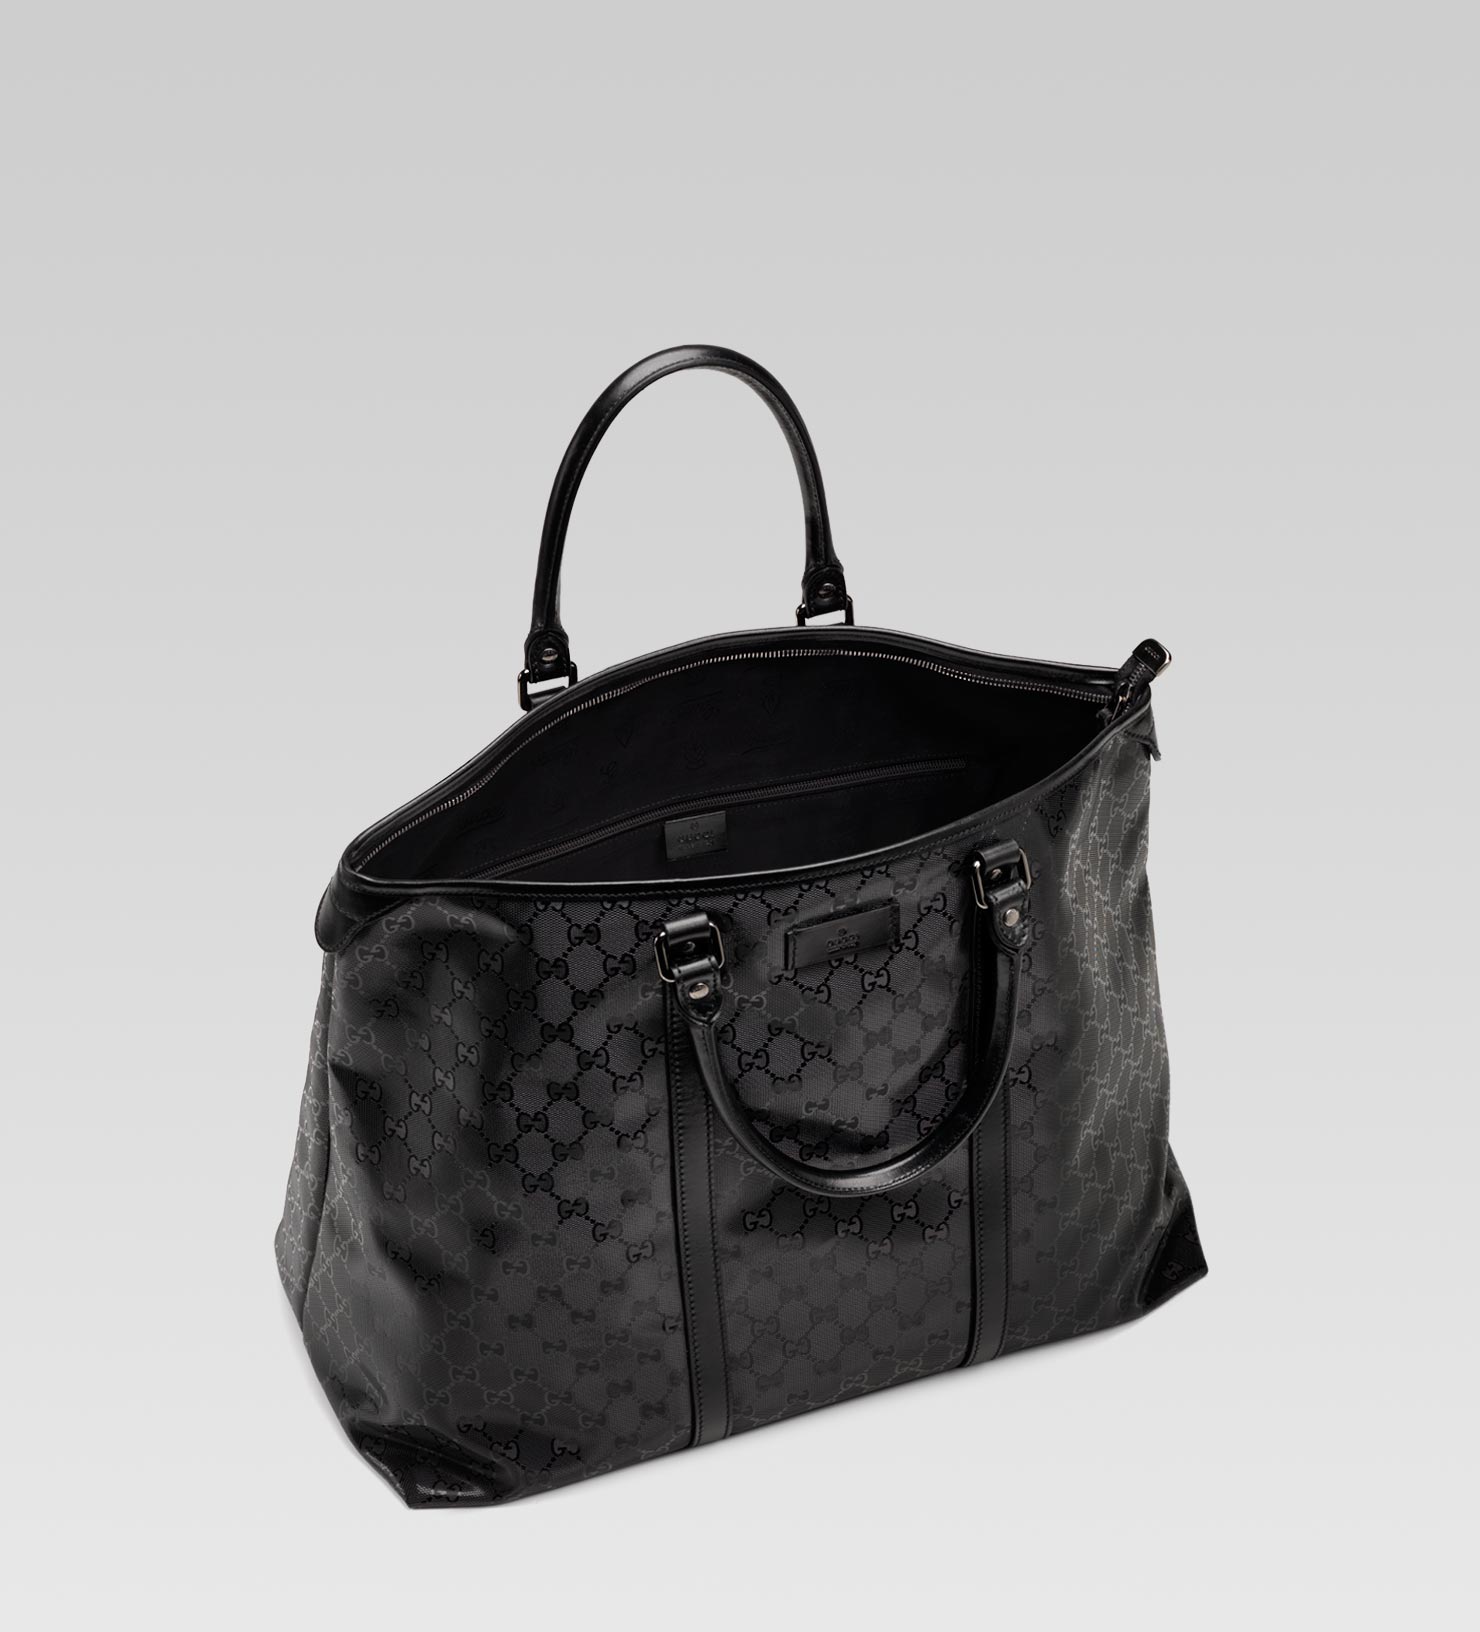 Gucci Black Canvas Bag | Paul Smith